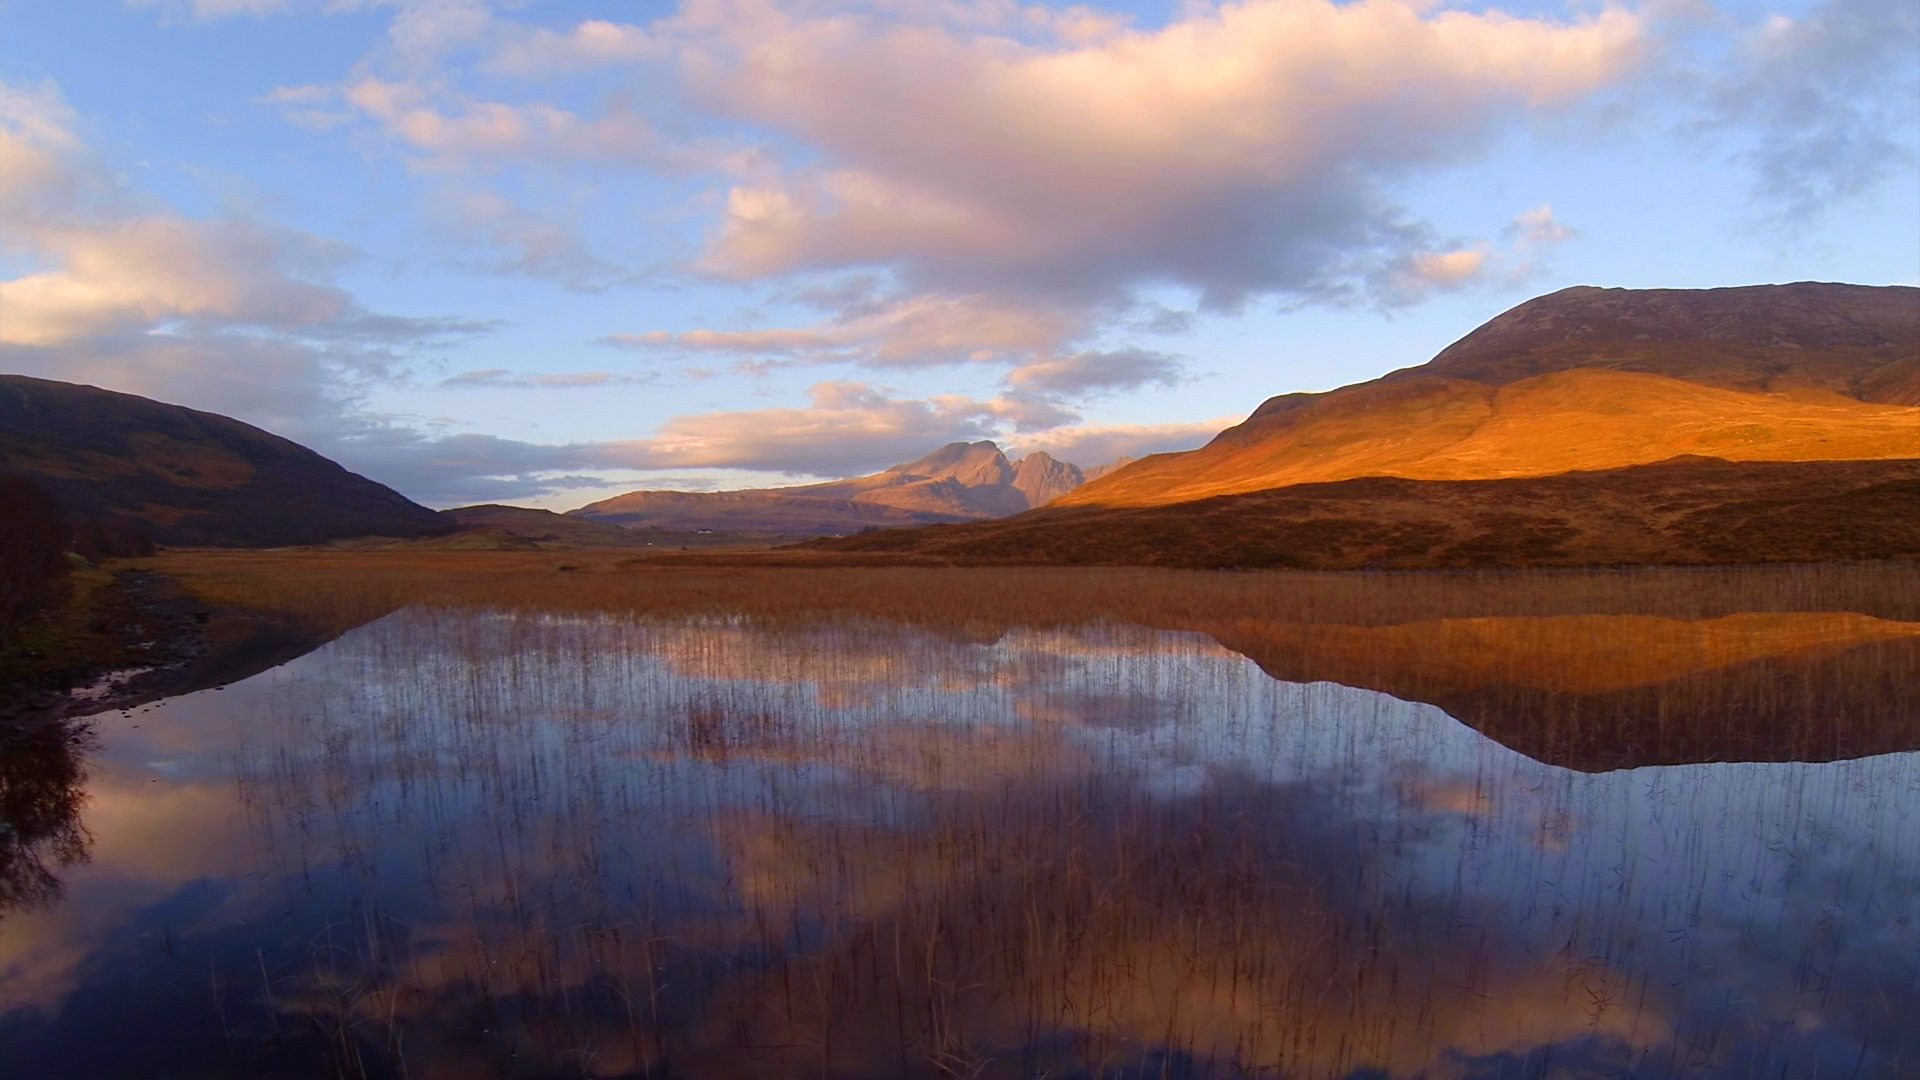 Show Highlands - Scotland's Wild Heart